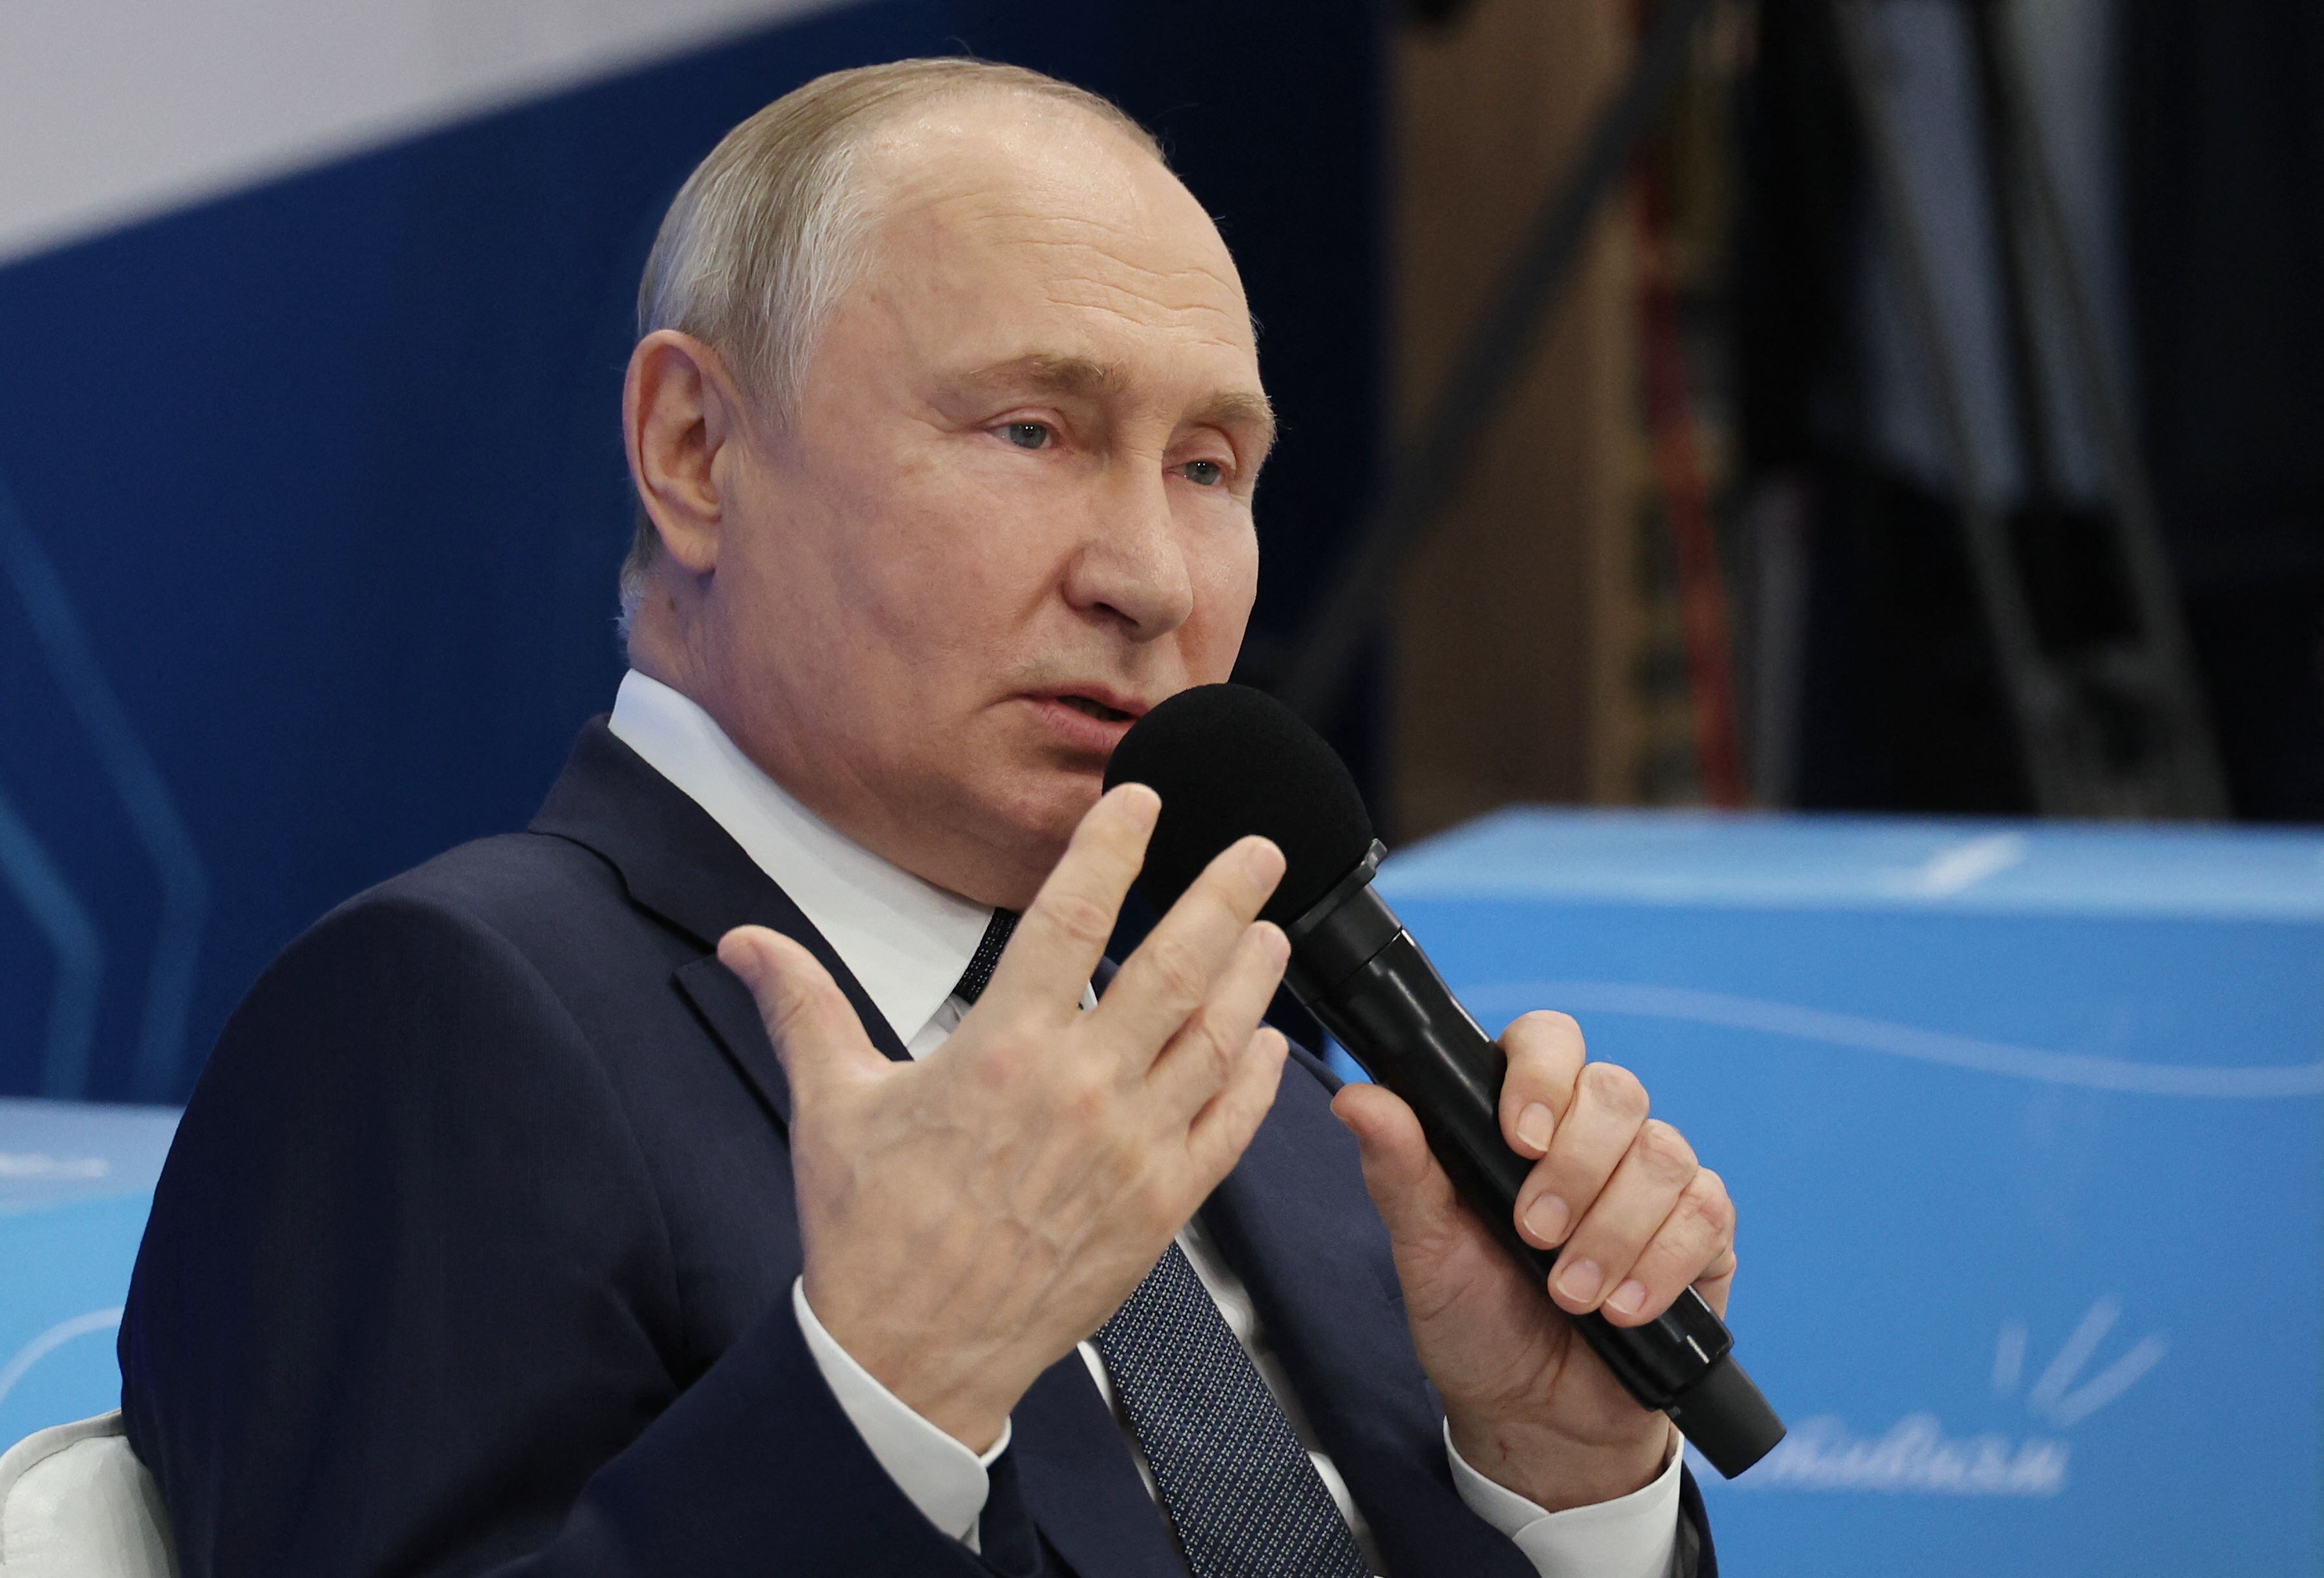 Putin “open” to negotiating grain deal after new attack on Ukrainian port